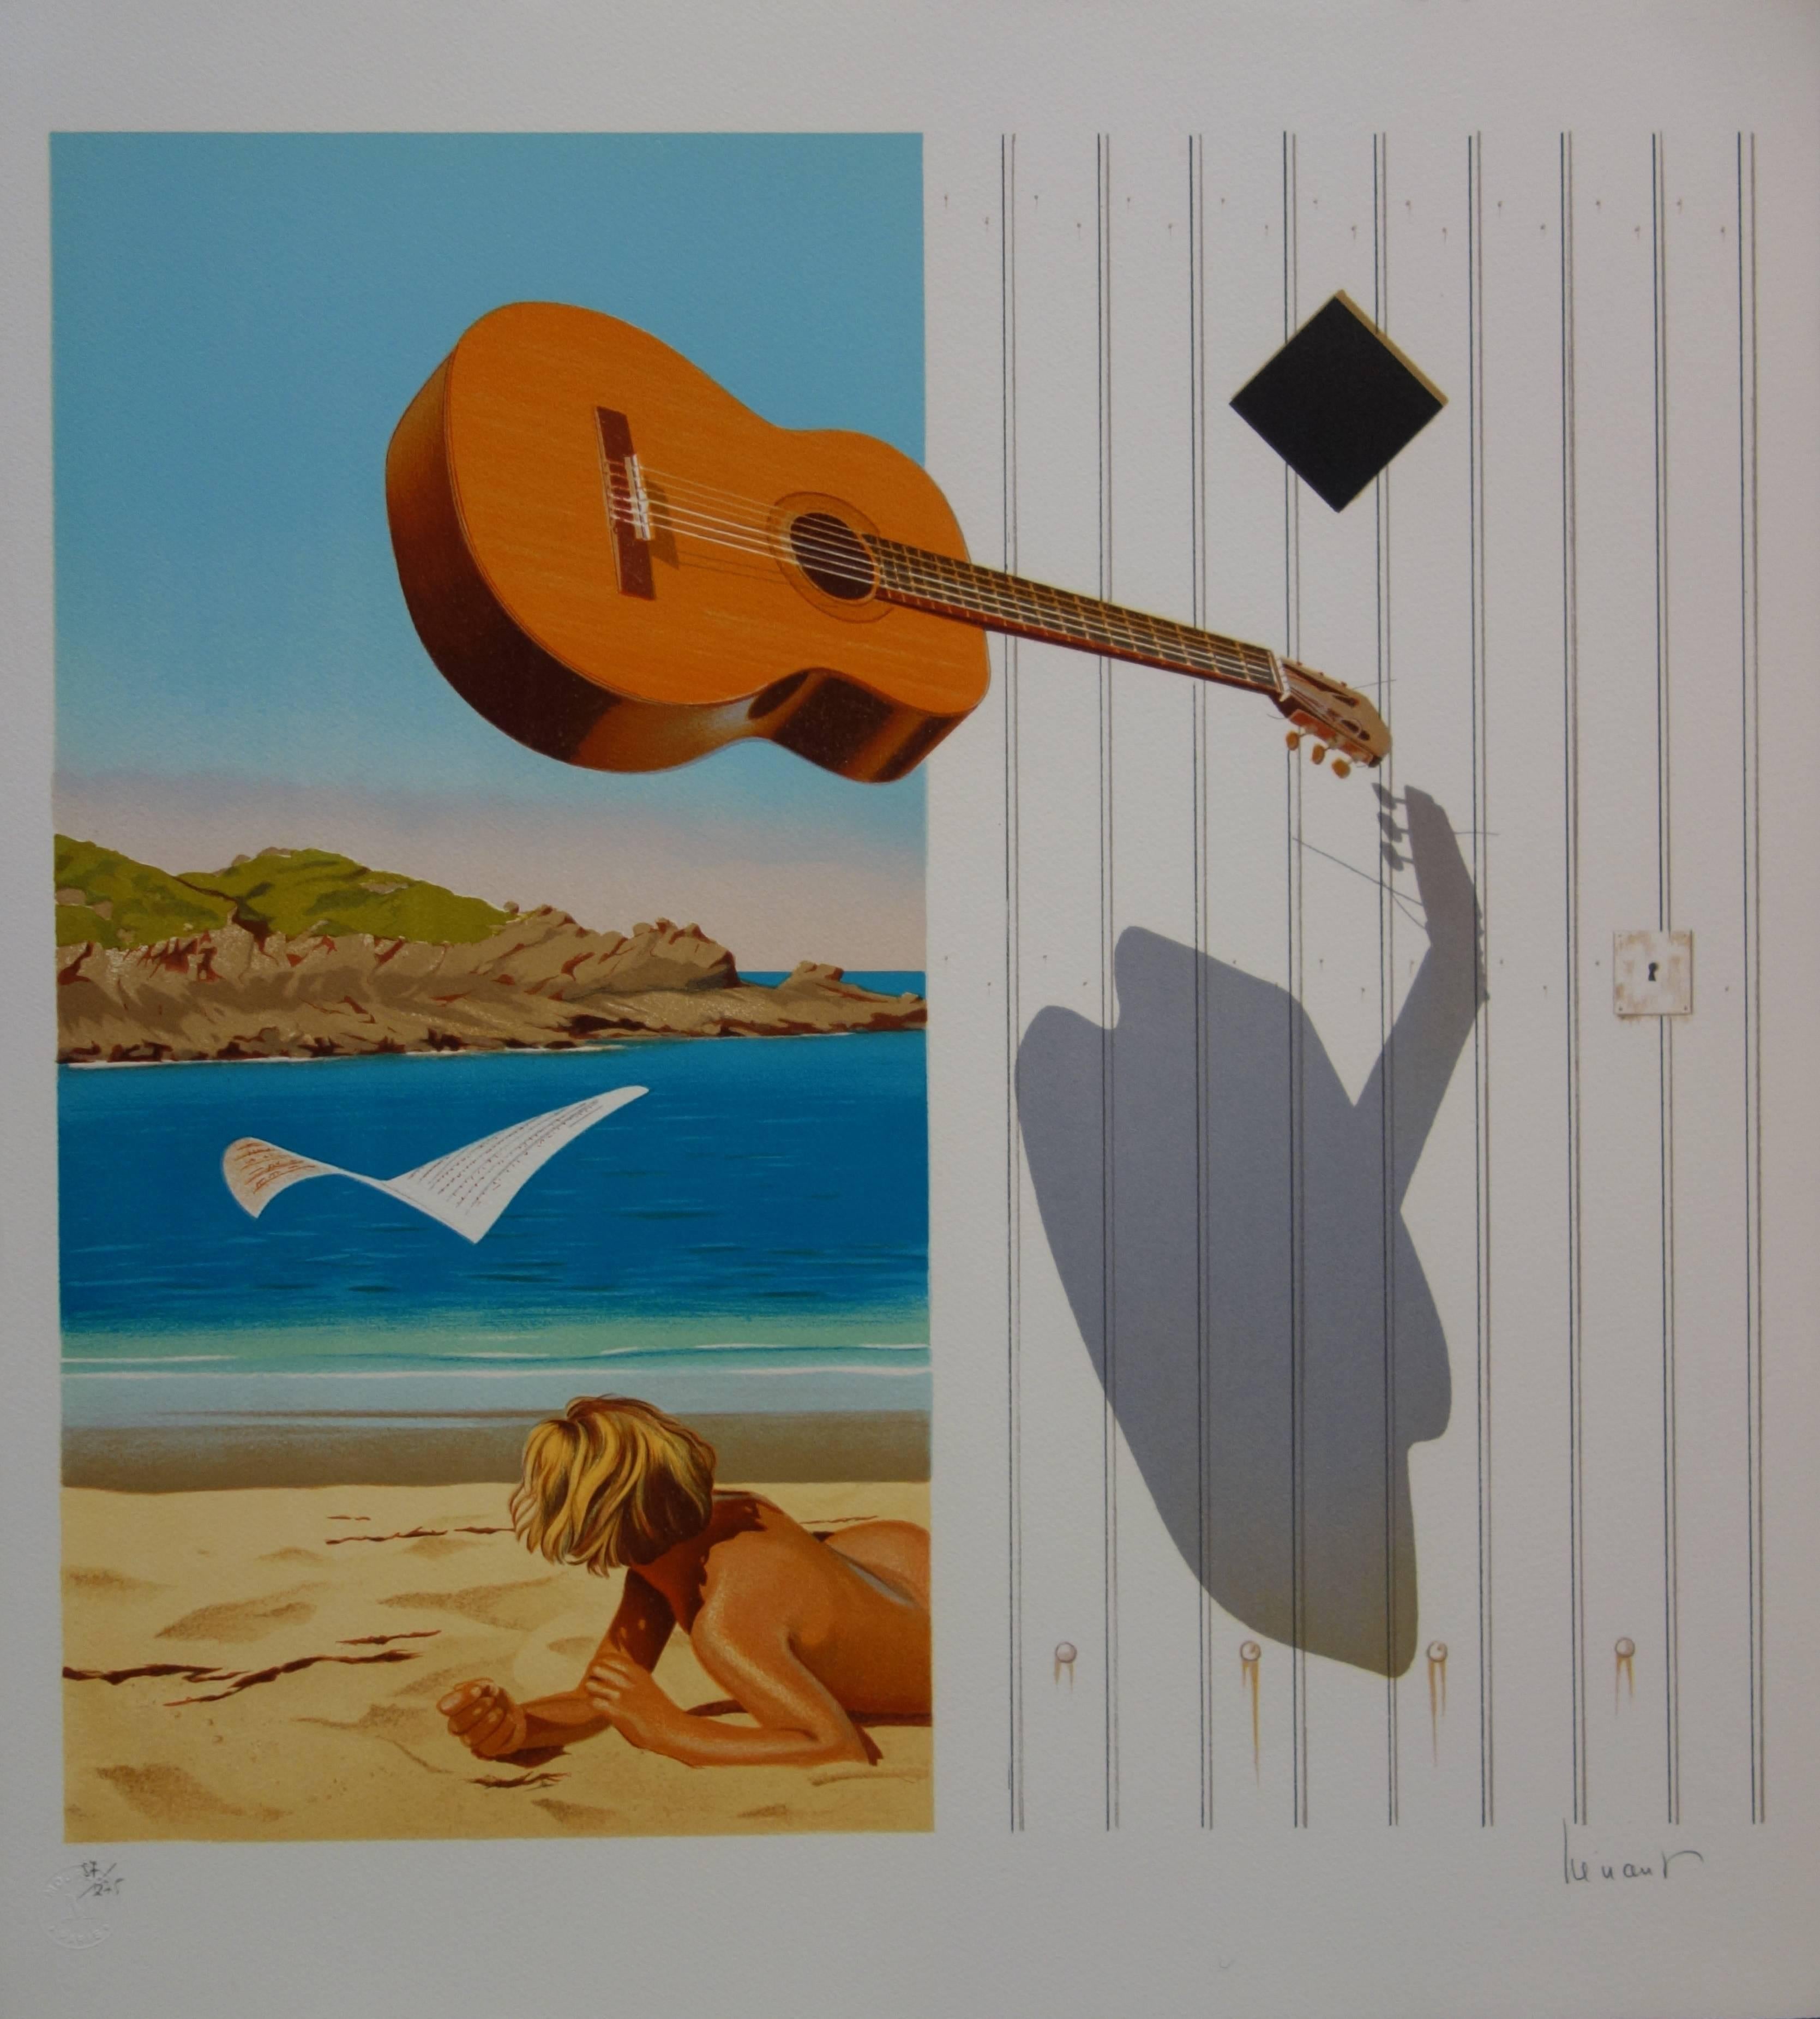 Jean-Pierre Henaut Figurative Print - Surrealist Beach & Guitar - Original handsigned lithograph - 275ex